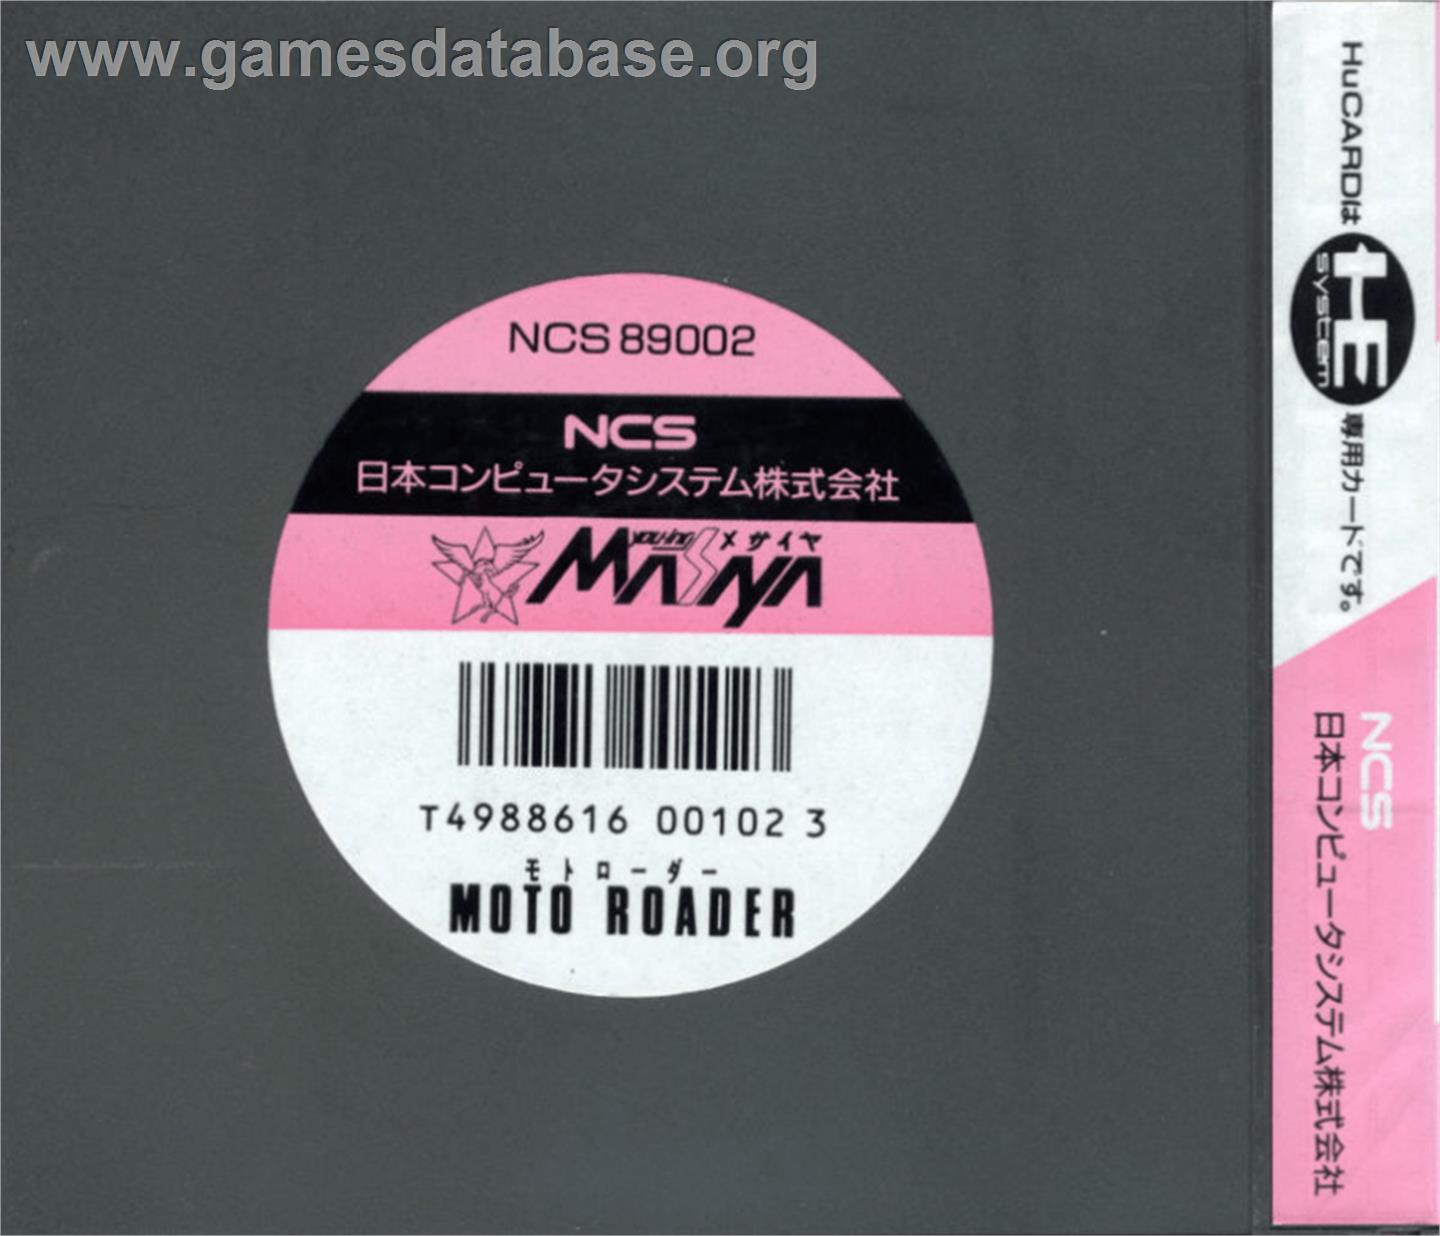 Moto Roader - NEC PC Engine - Artwork - Box Back